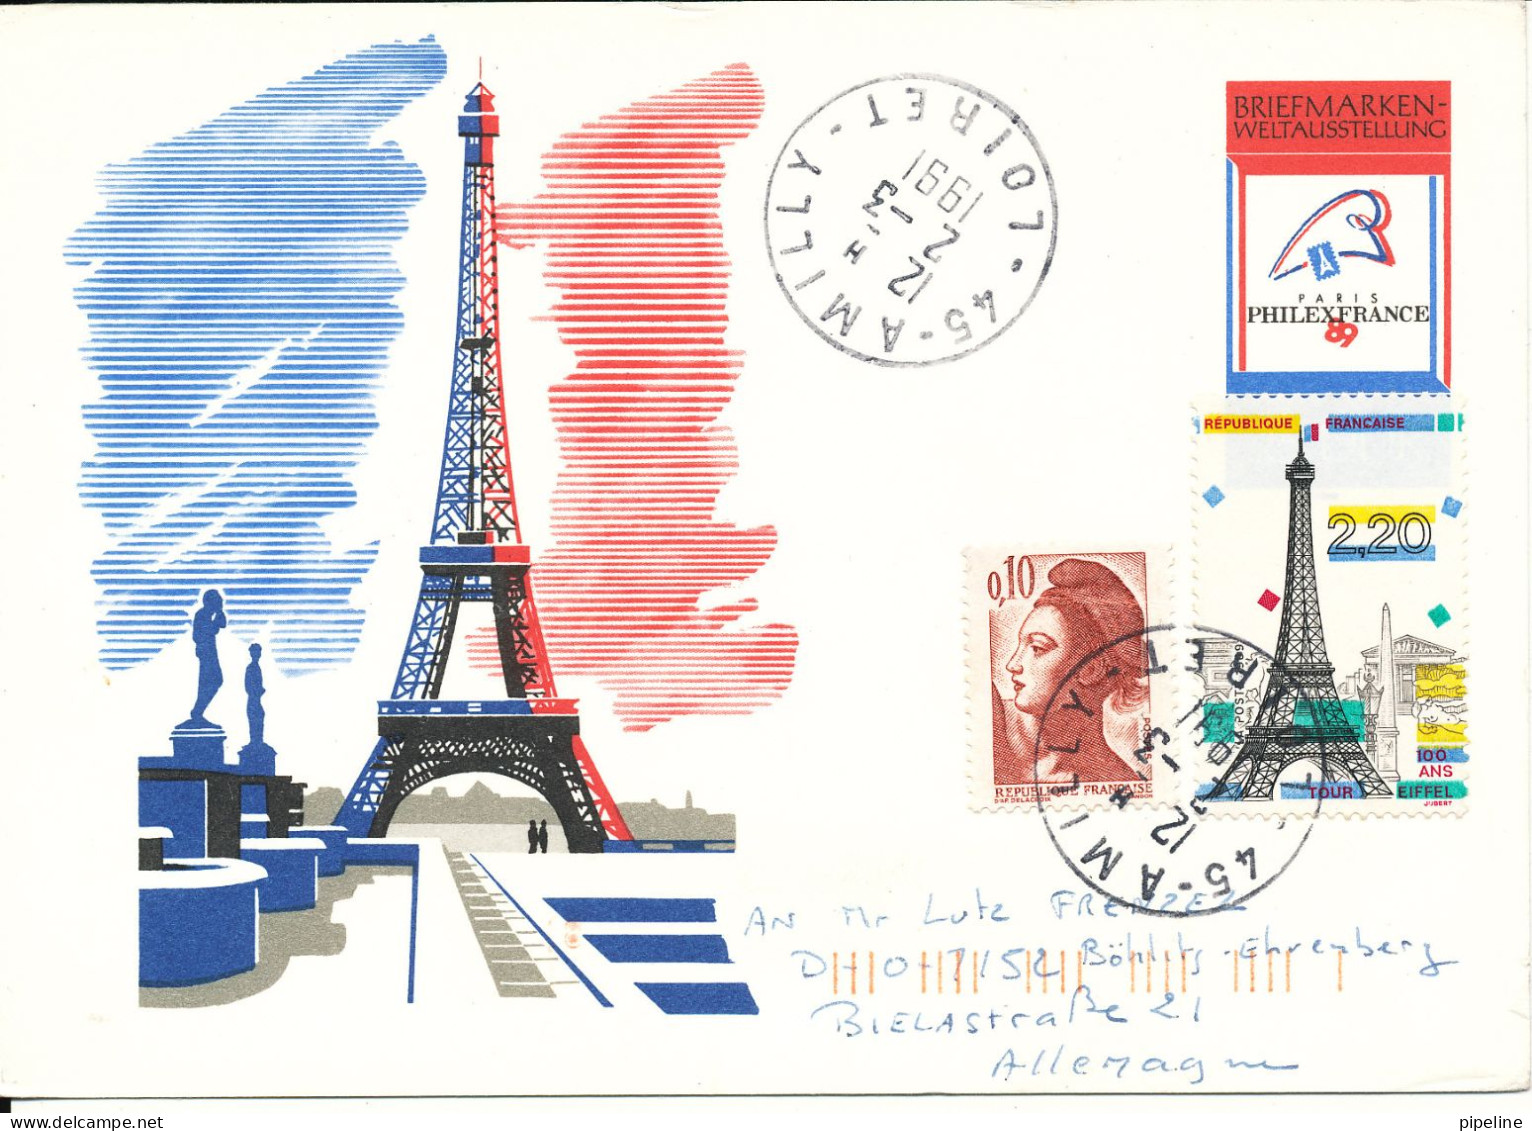 France Uprated Postal Stationery Postcard Philexfrance 89 Eifel Tower Sent To Germany Amilly Loire 2-3-1991 - Kartenbriefe